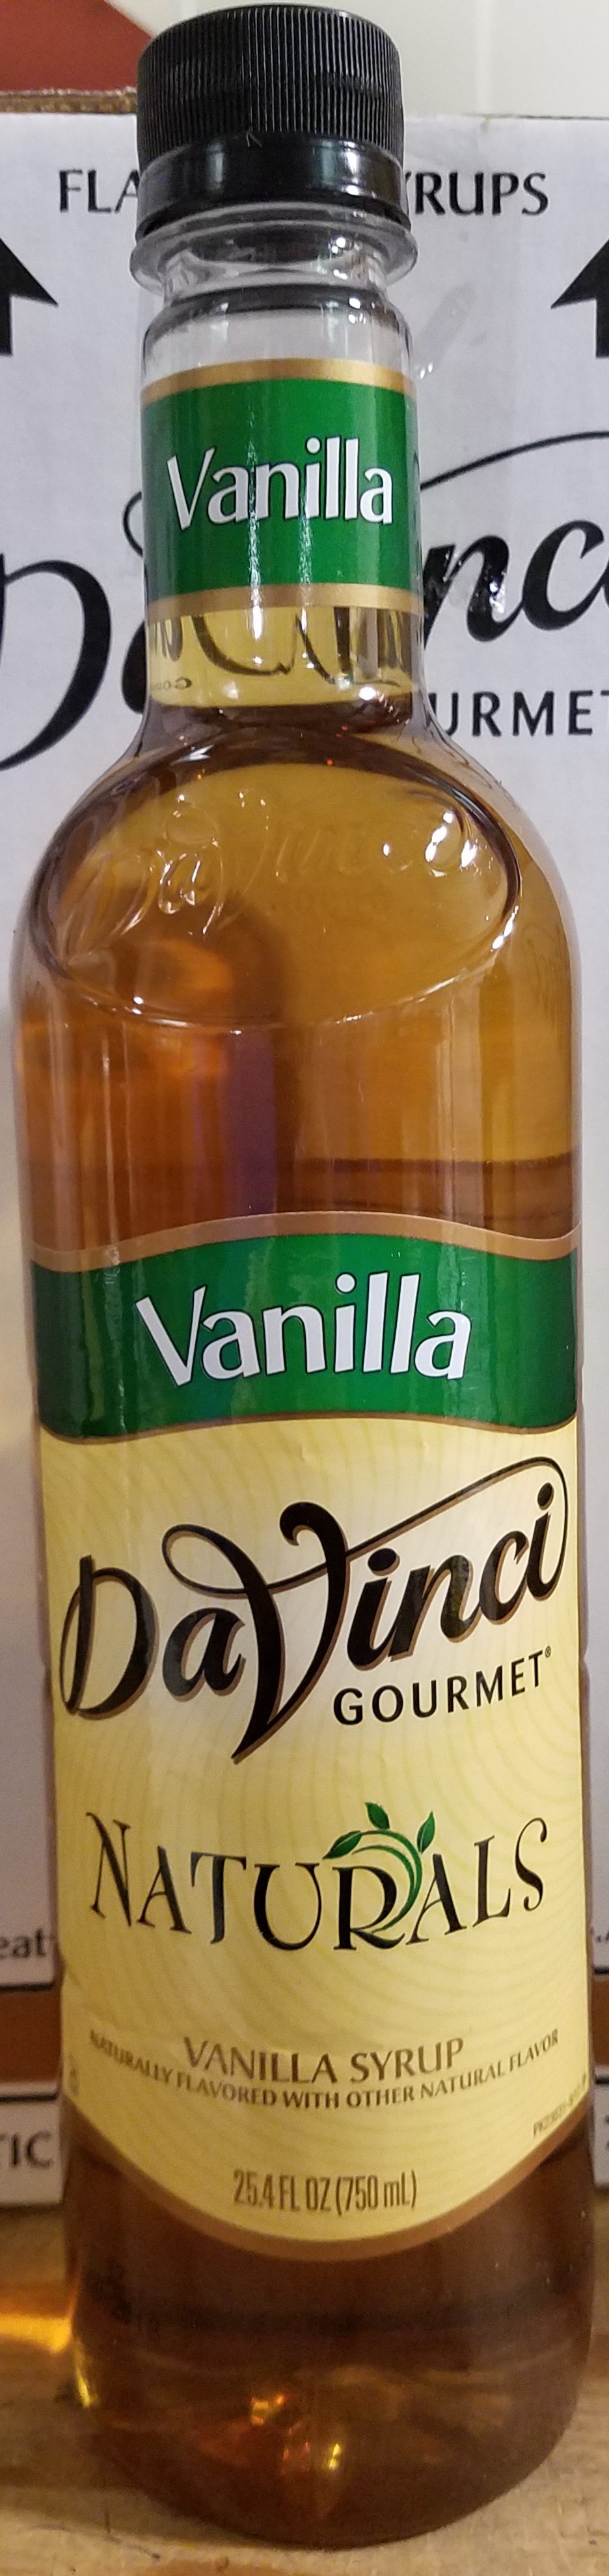 DaVinci Natural Vanilla 4/750ml - Sold by EA